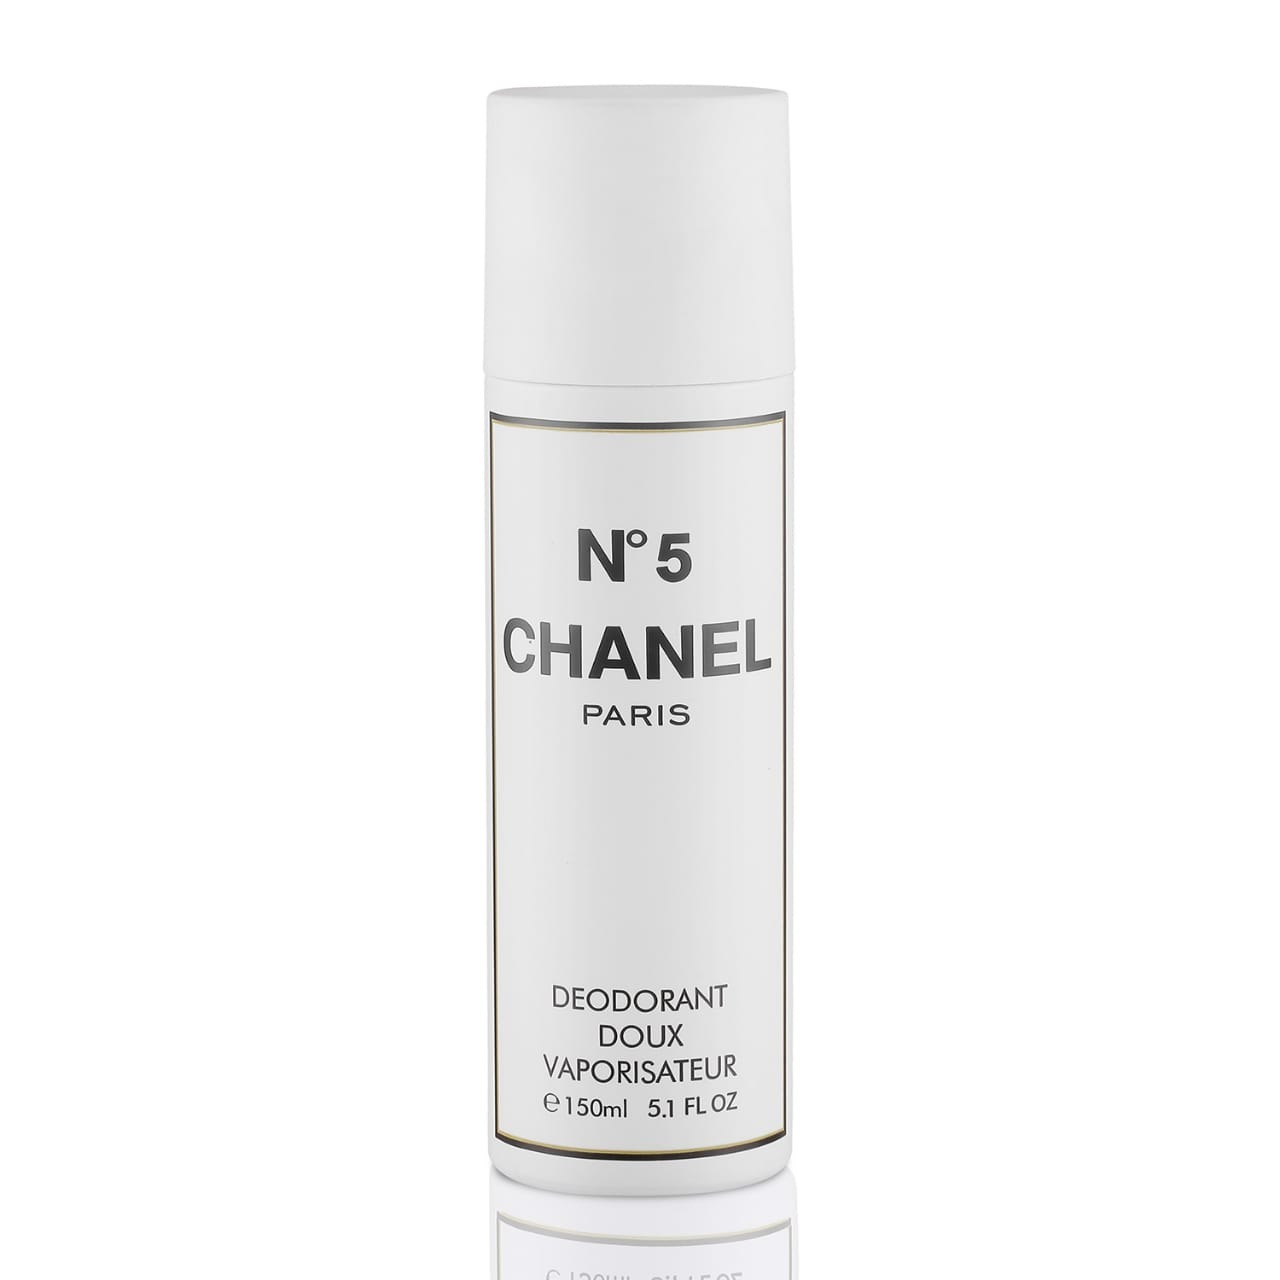 N5 Chanel Paris DEODORANT Doux Vaporisateur Spray